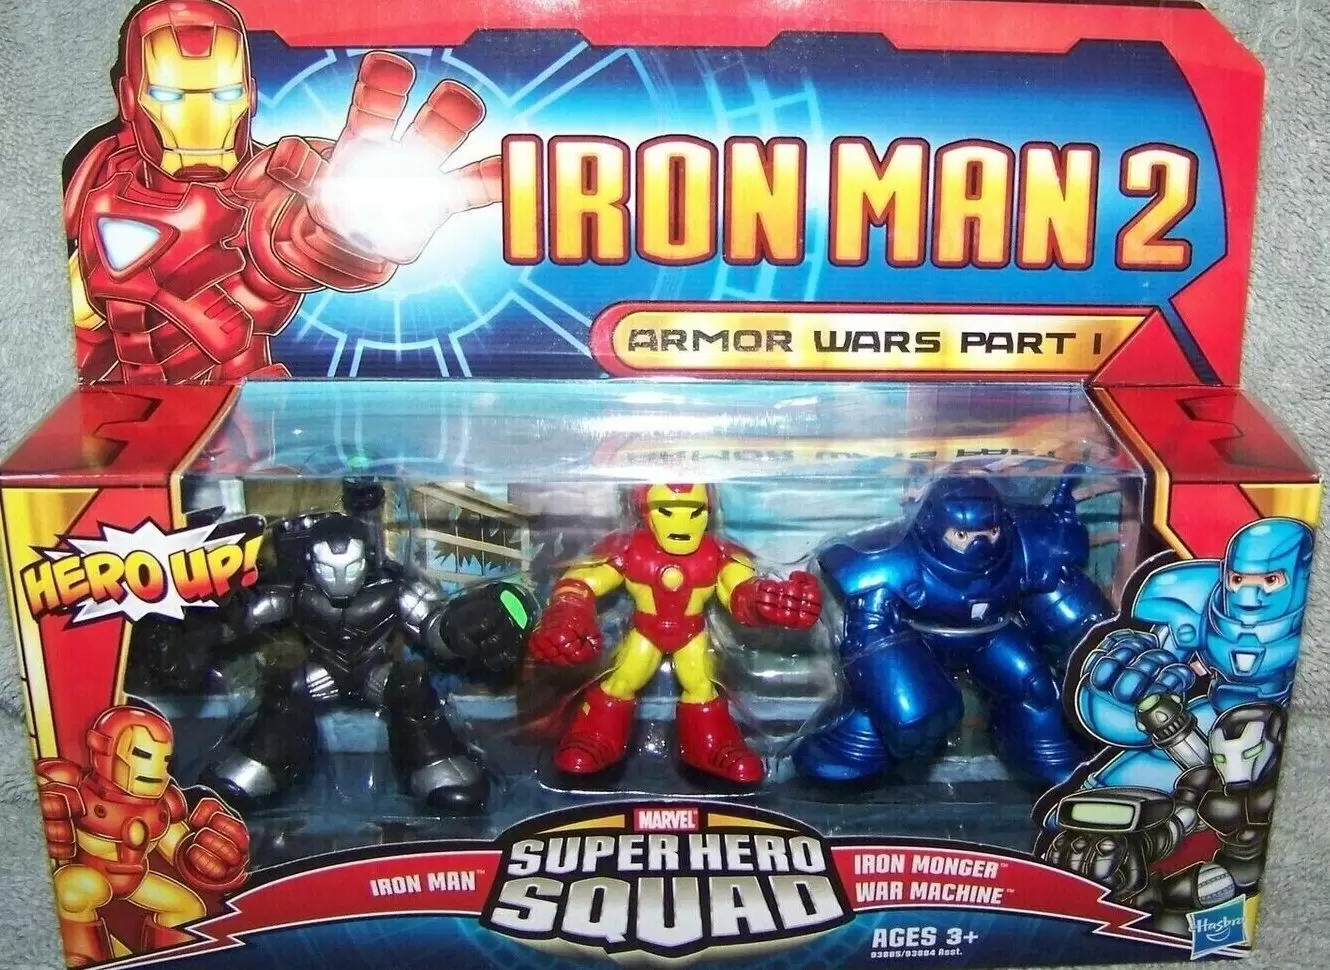 Marvel Super Hero Squad Action Figures - Iron Man 2 - Armor Wars Part I